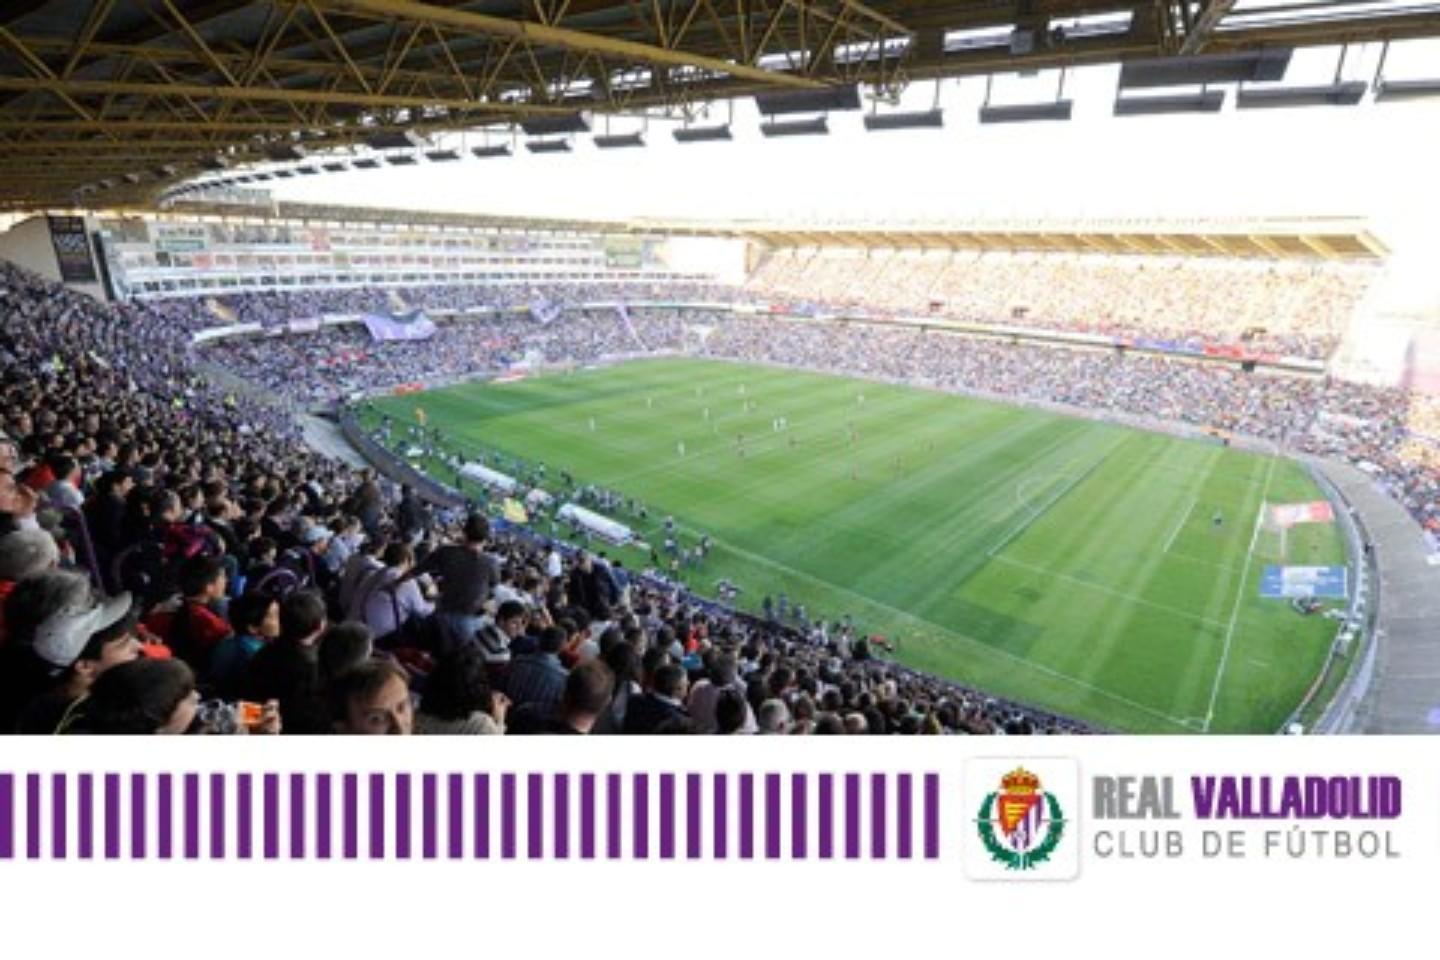 Valladolid Tickets | Buy or Sell Tickets for Valladolid 2020 Fixtures - viagogo1440 x 960